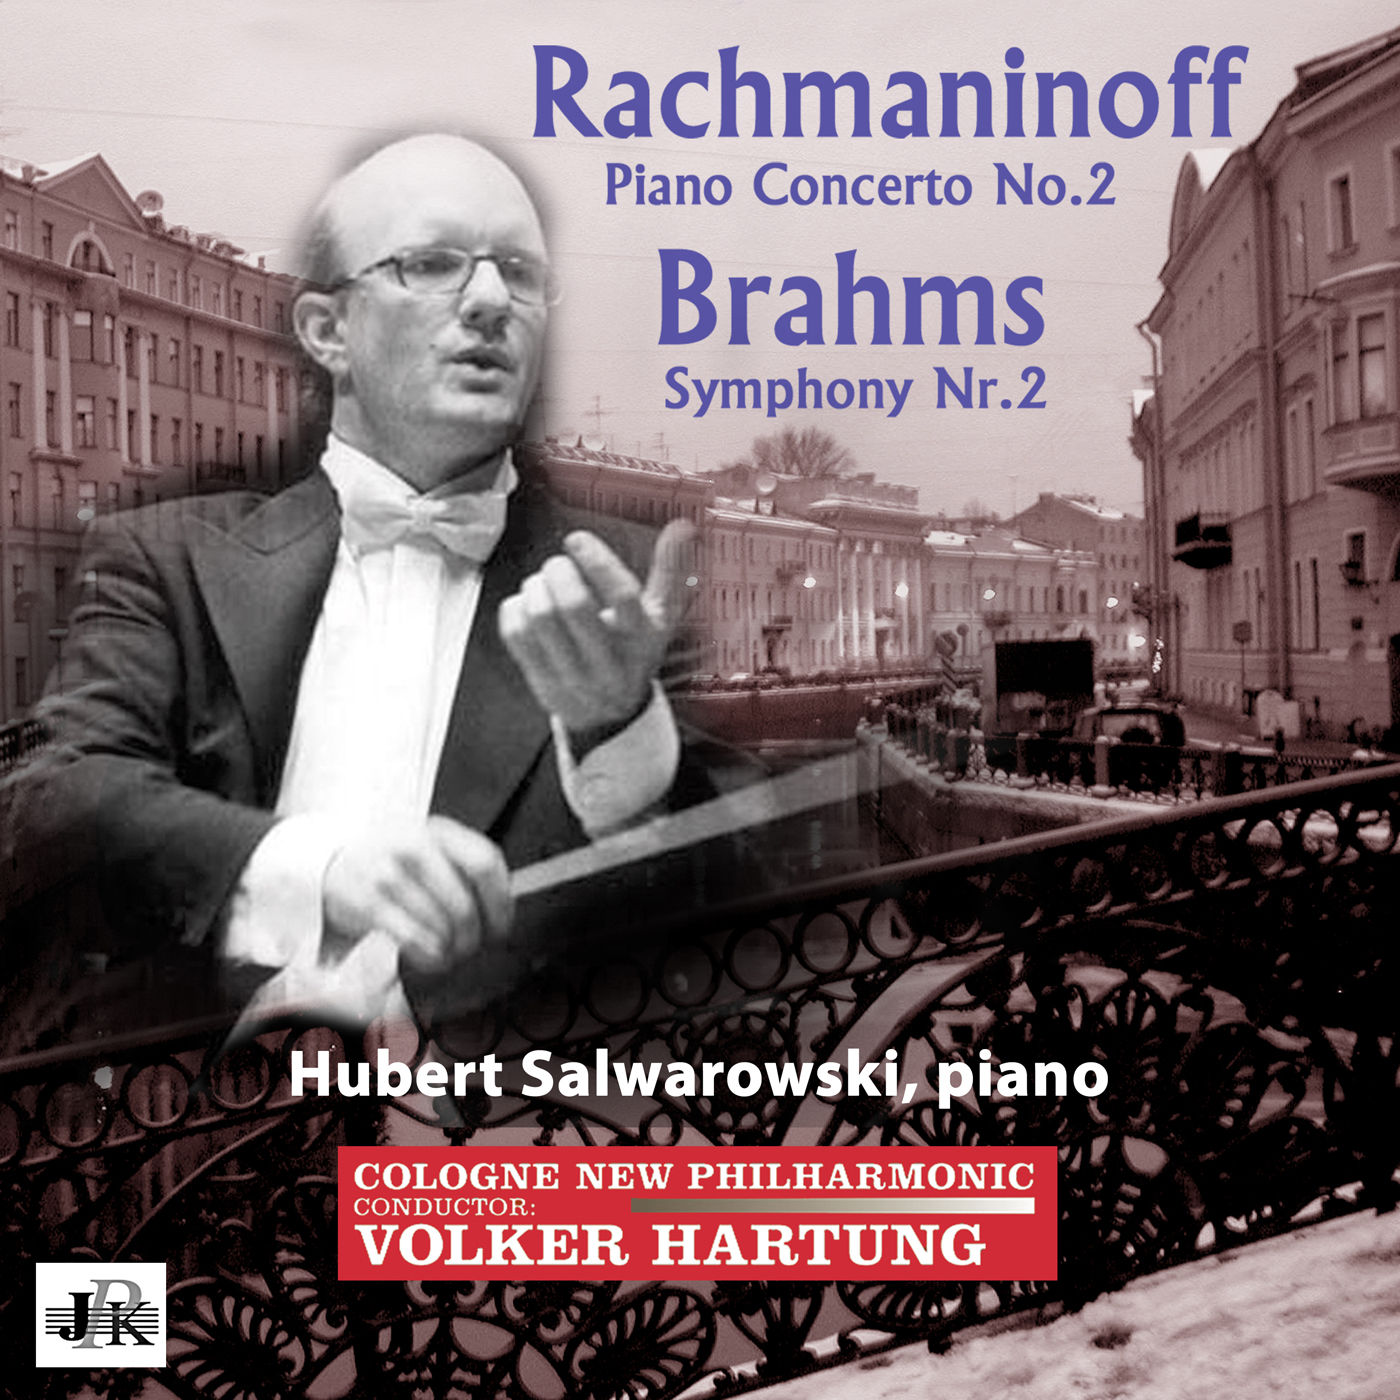 Hubert Salwarowski, Cologne New Philharmonic Orchestra, Volker Hartung - Rachmaninov & Brahms (2016) [FLAC 24bit/48kHz]